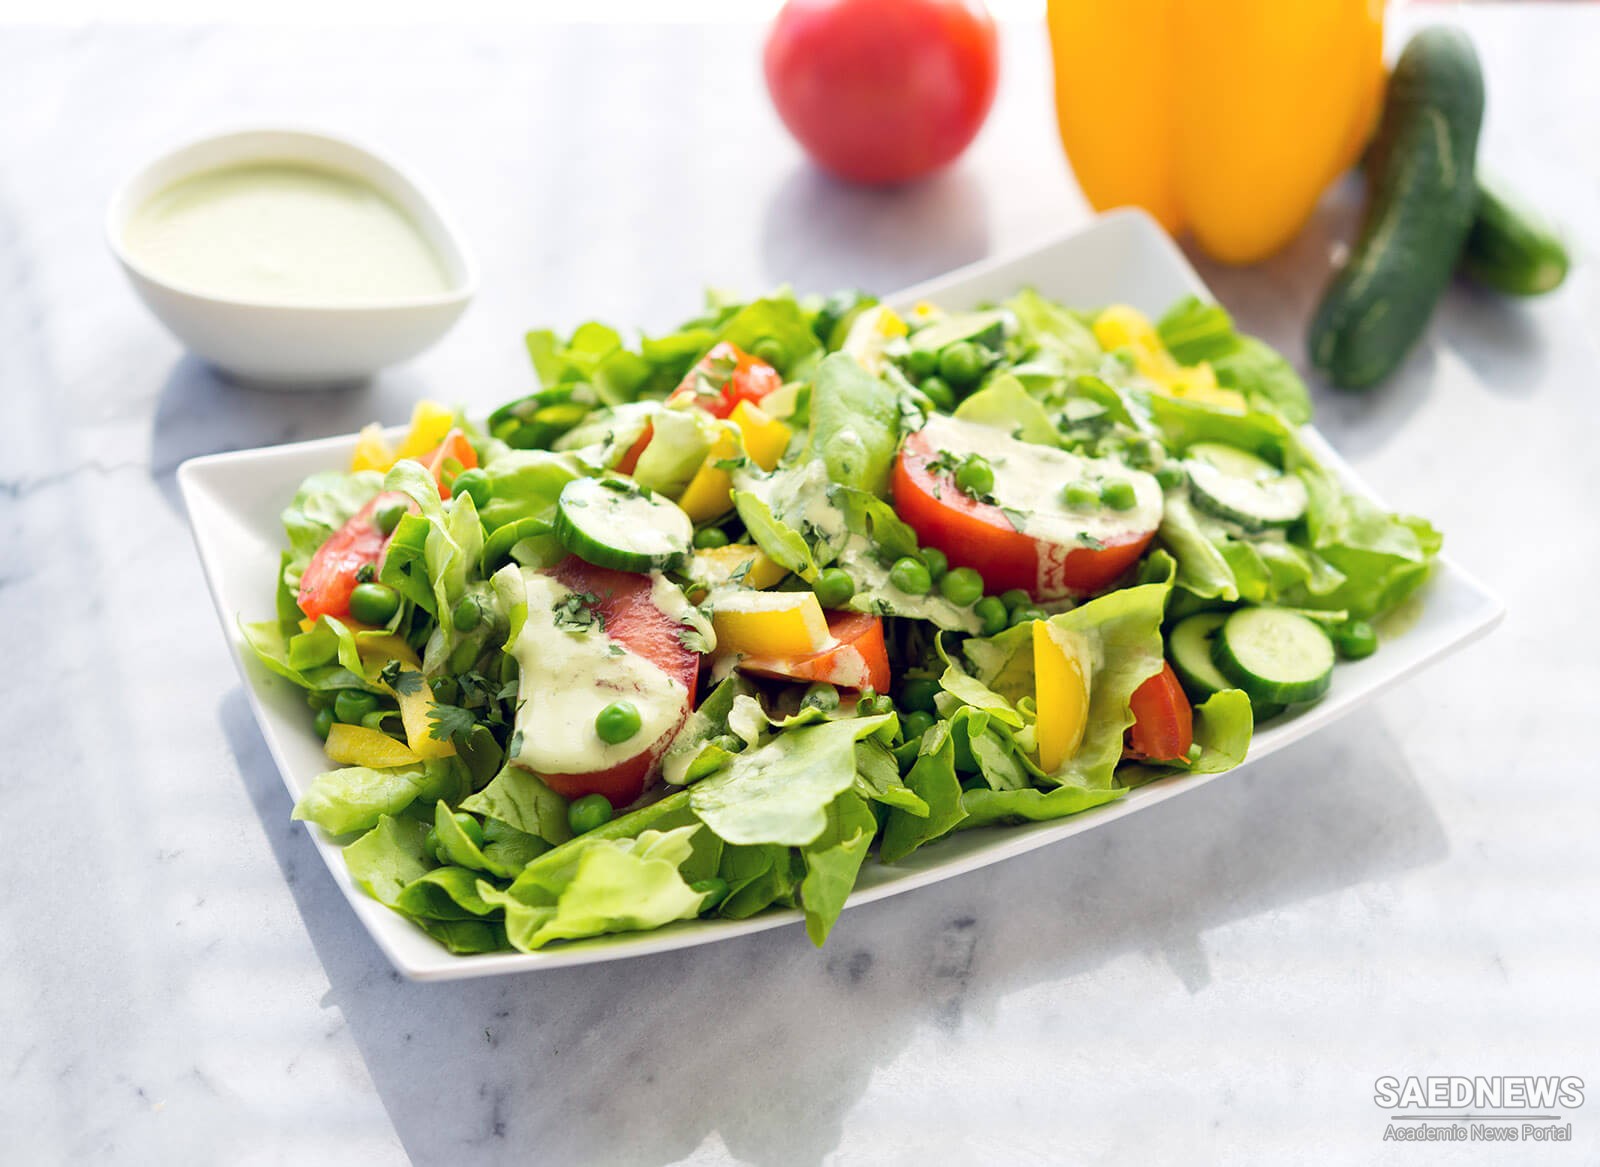 Iranian Salads: Romaine Lettuce Salad